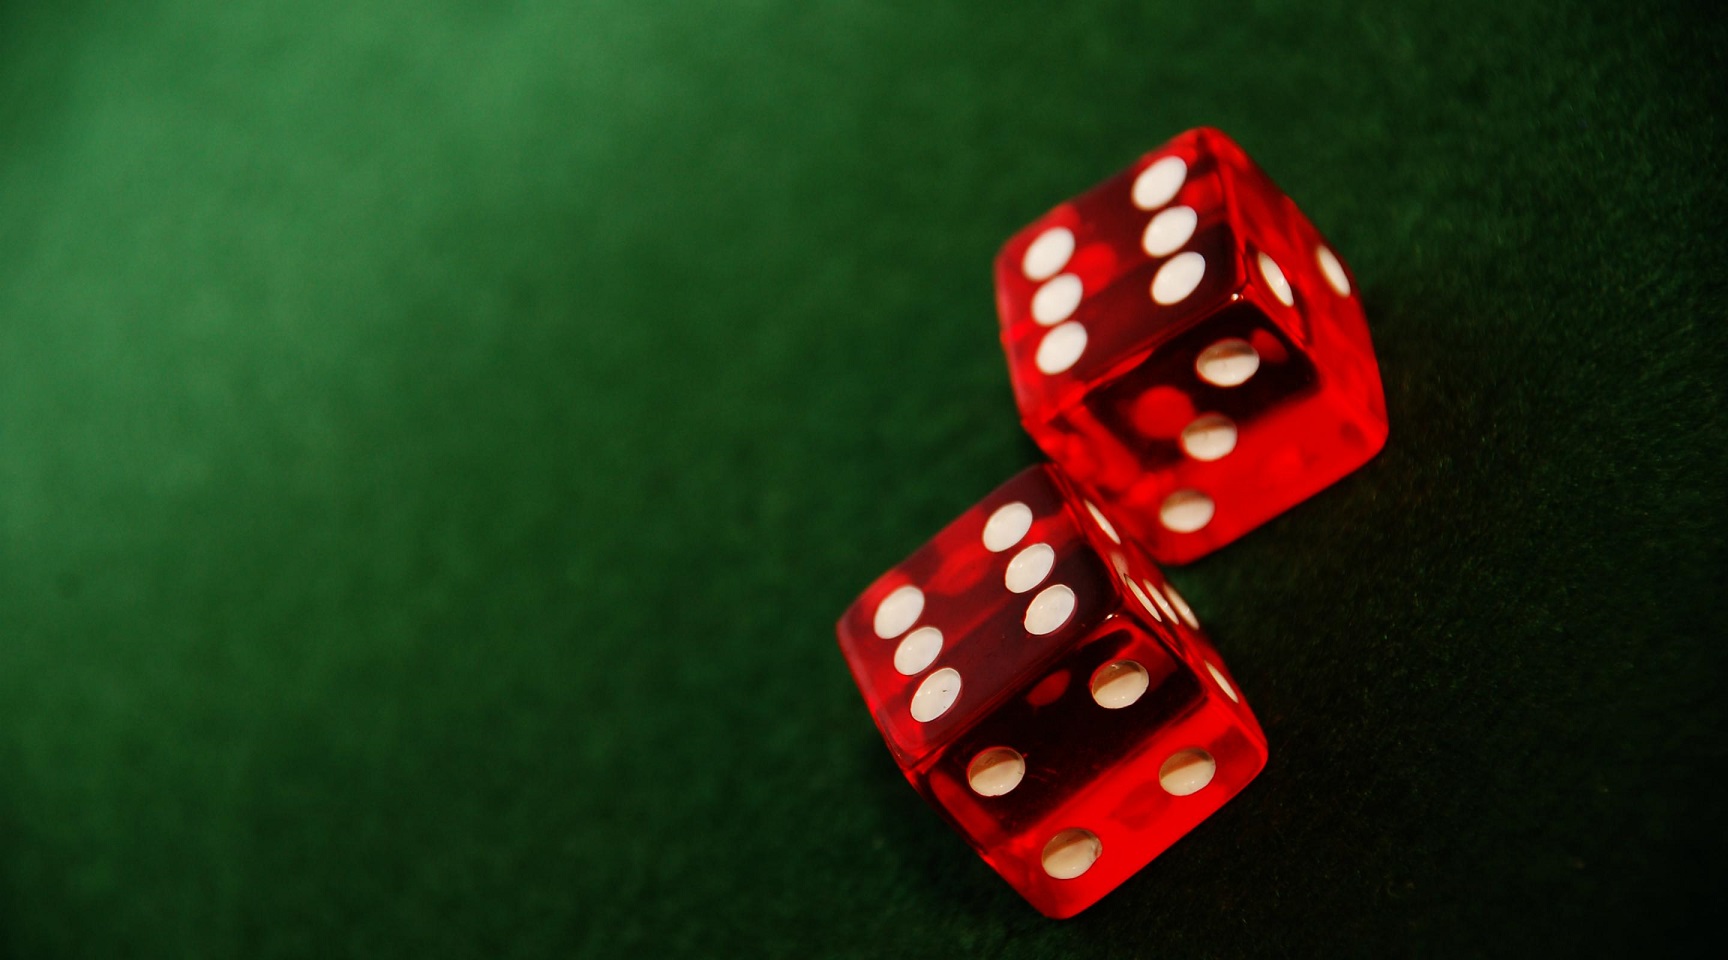 Krikya Best Strategies for Winning at Casino Games